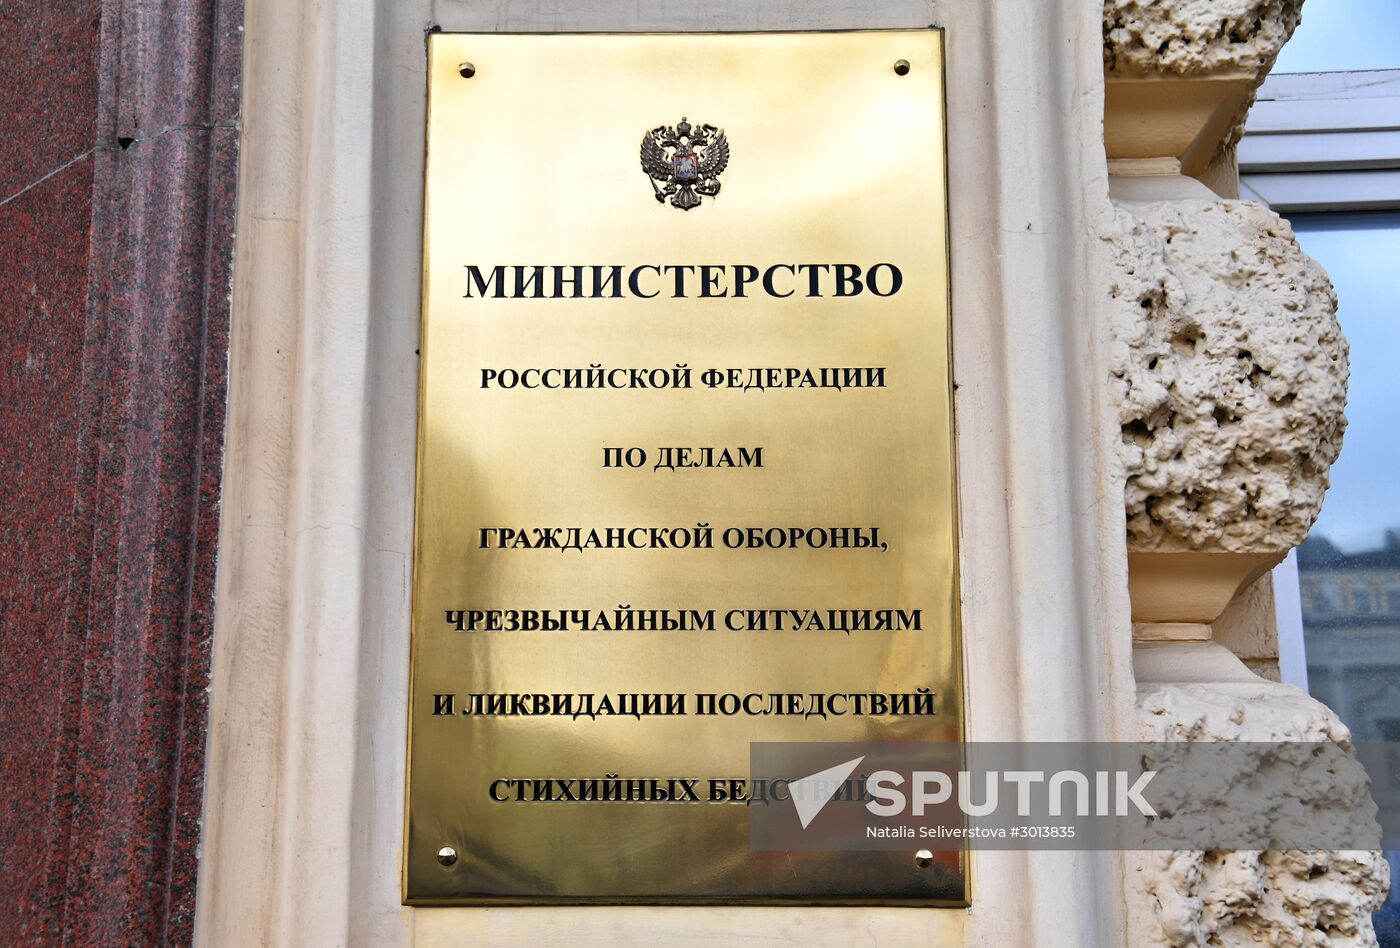 Russian Emergencies Ministry headquarters